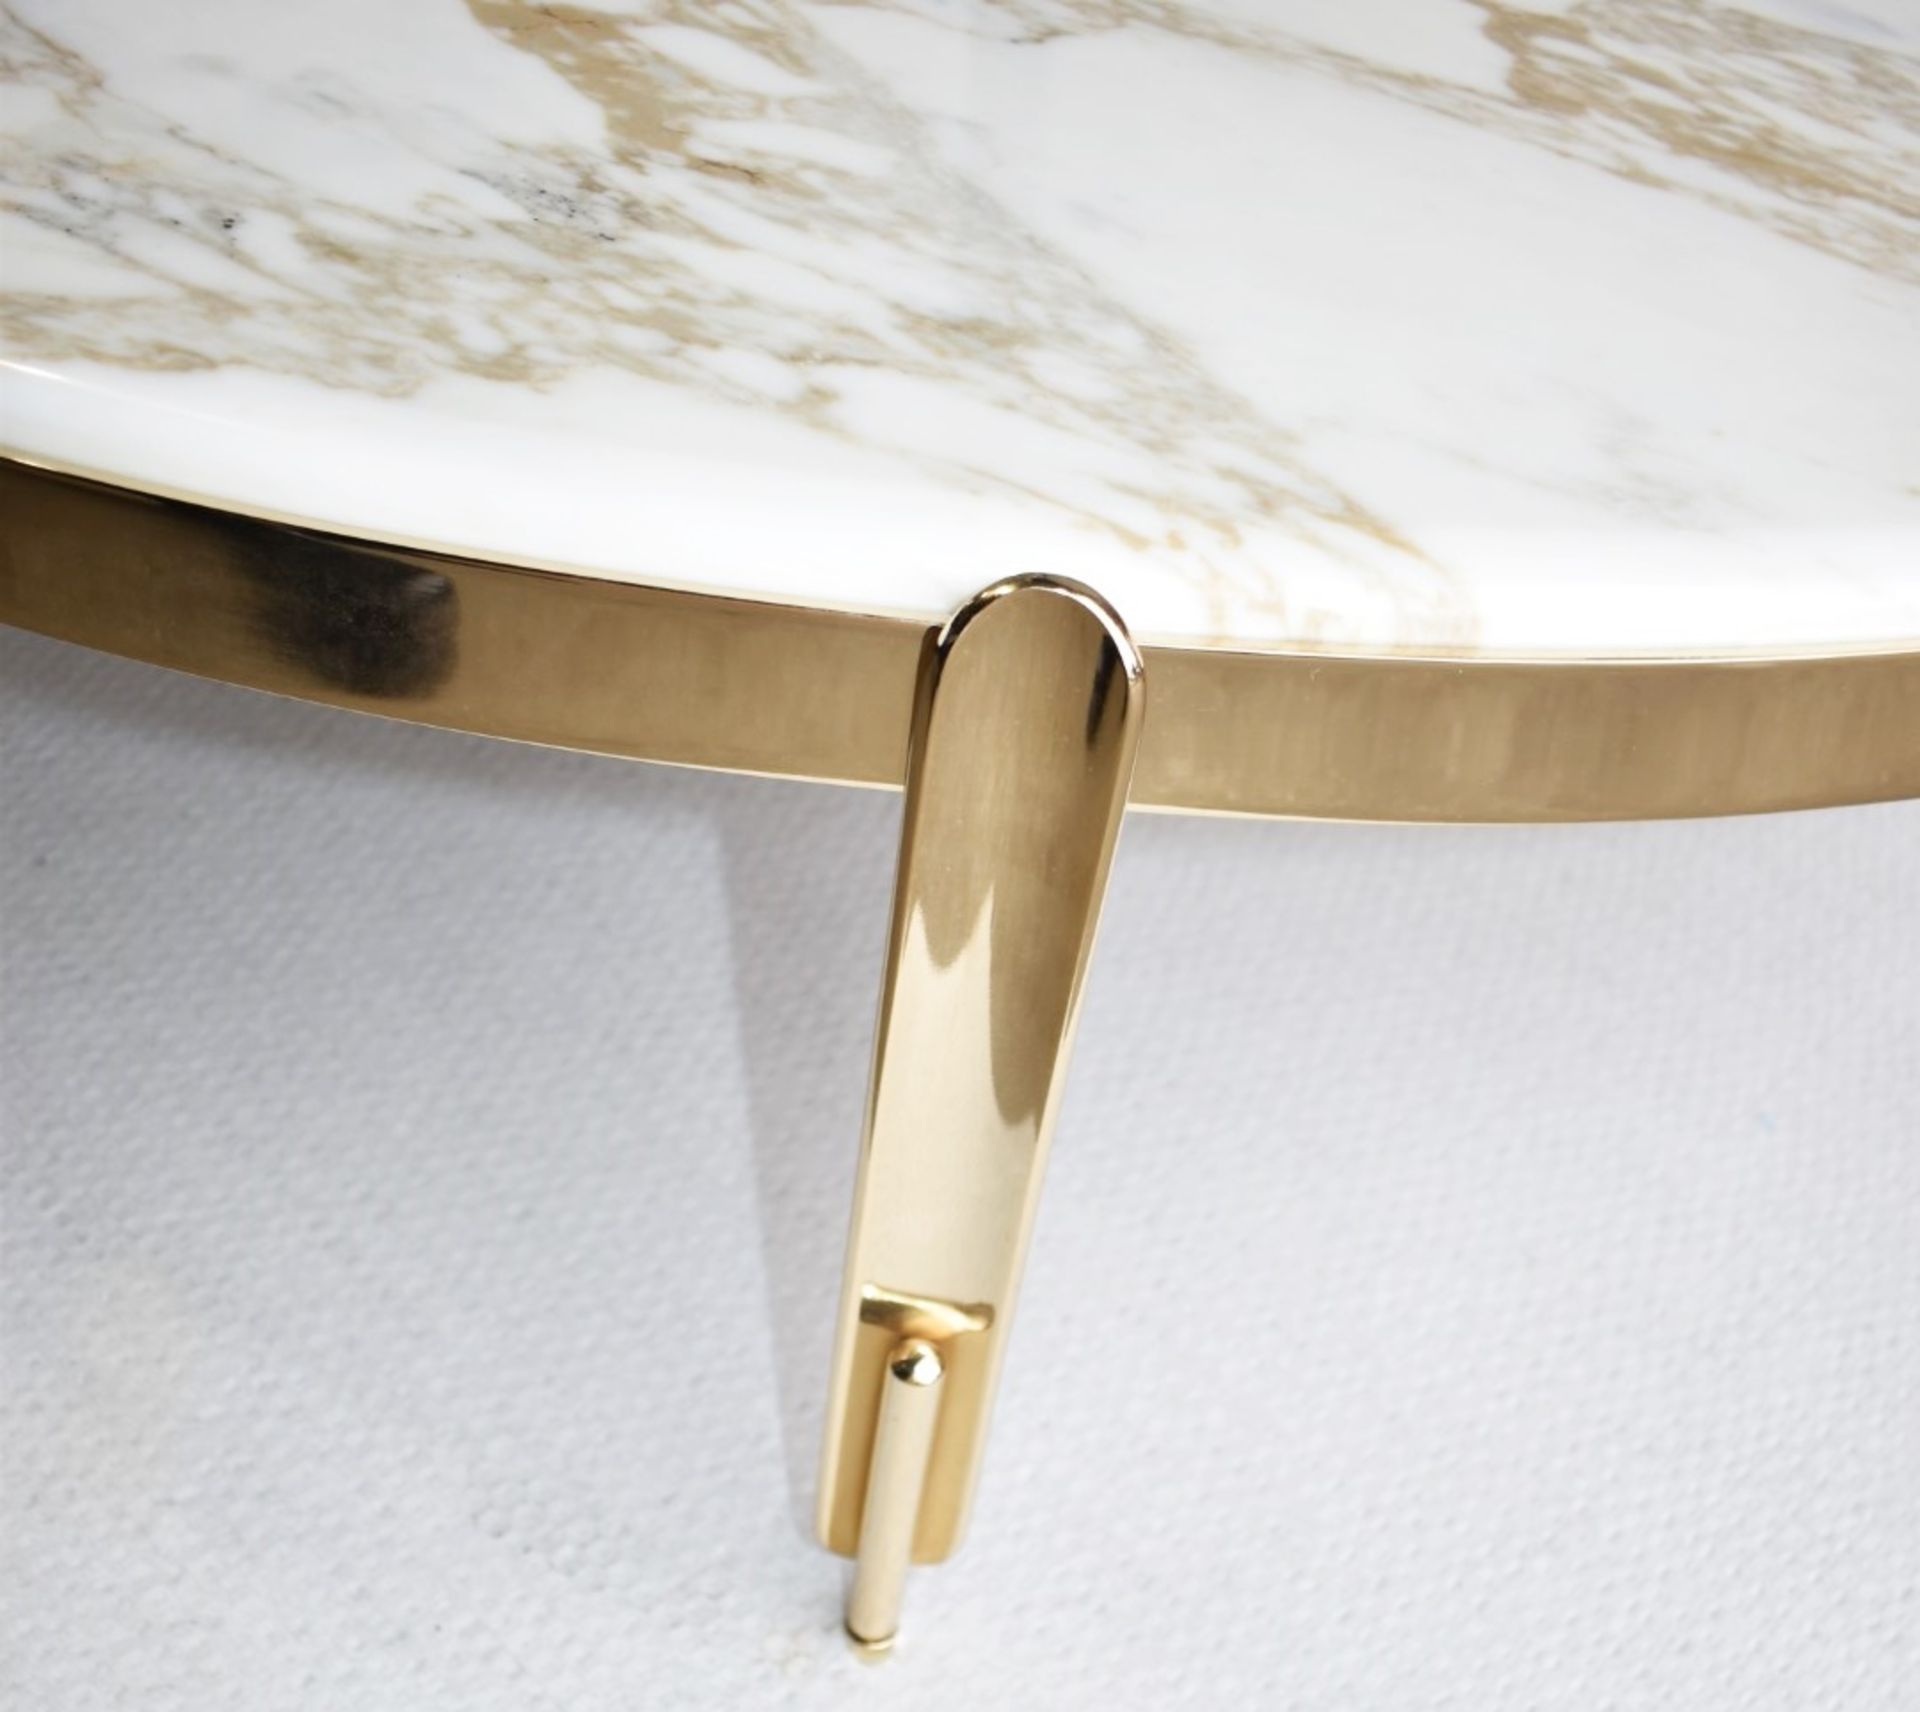 1 x ELIE SAAB MAISON 'Zenith' Luxury Italian Marble Topped Coffee Table - Original Price £6,480 - Image 4 of 6